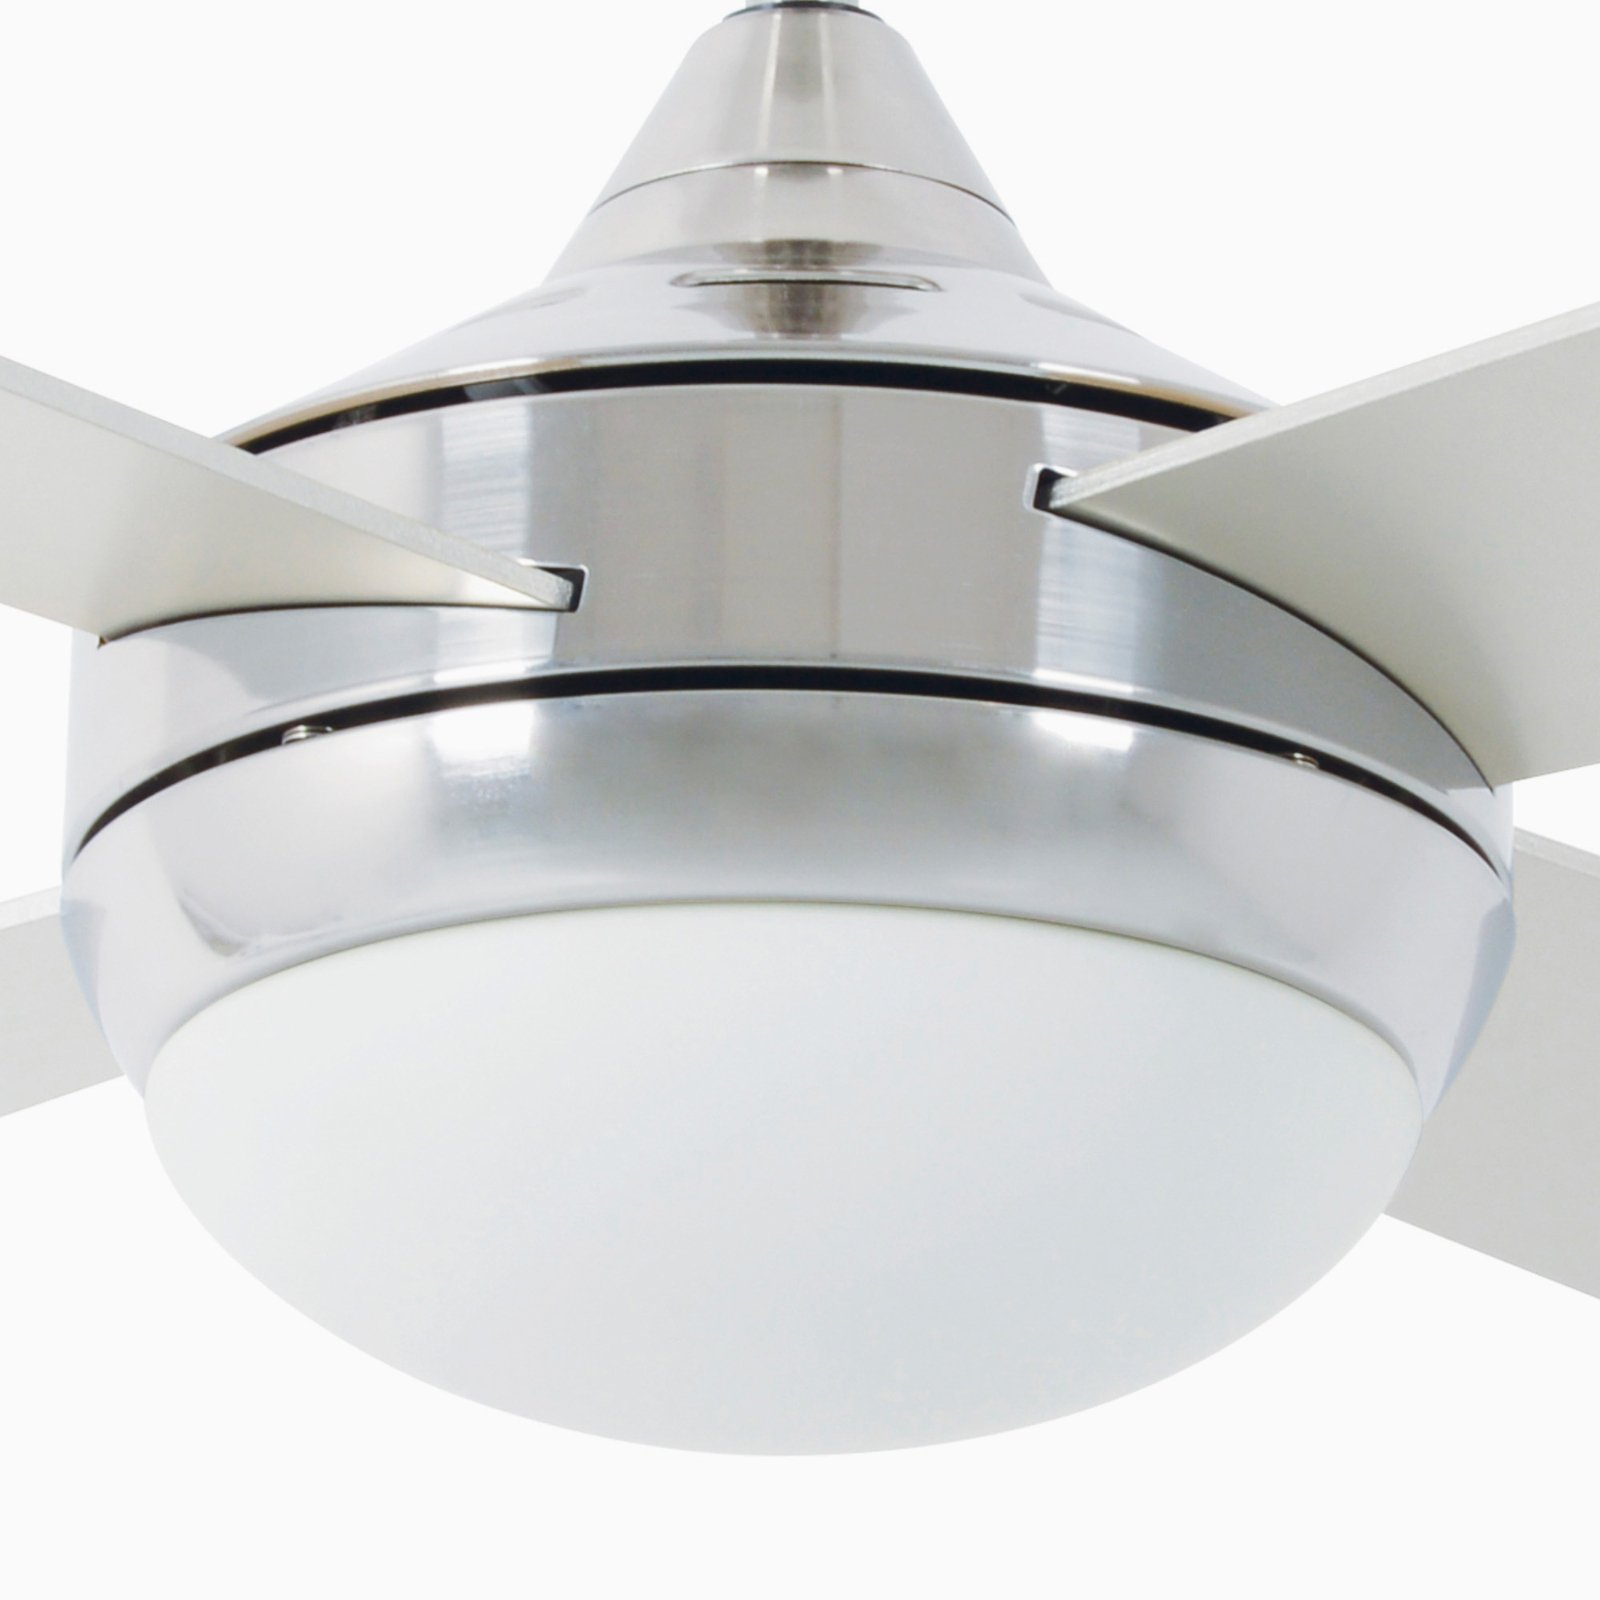 Icaria L ceiling fan with light aluminium/grey/maple